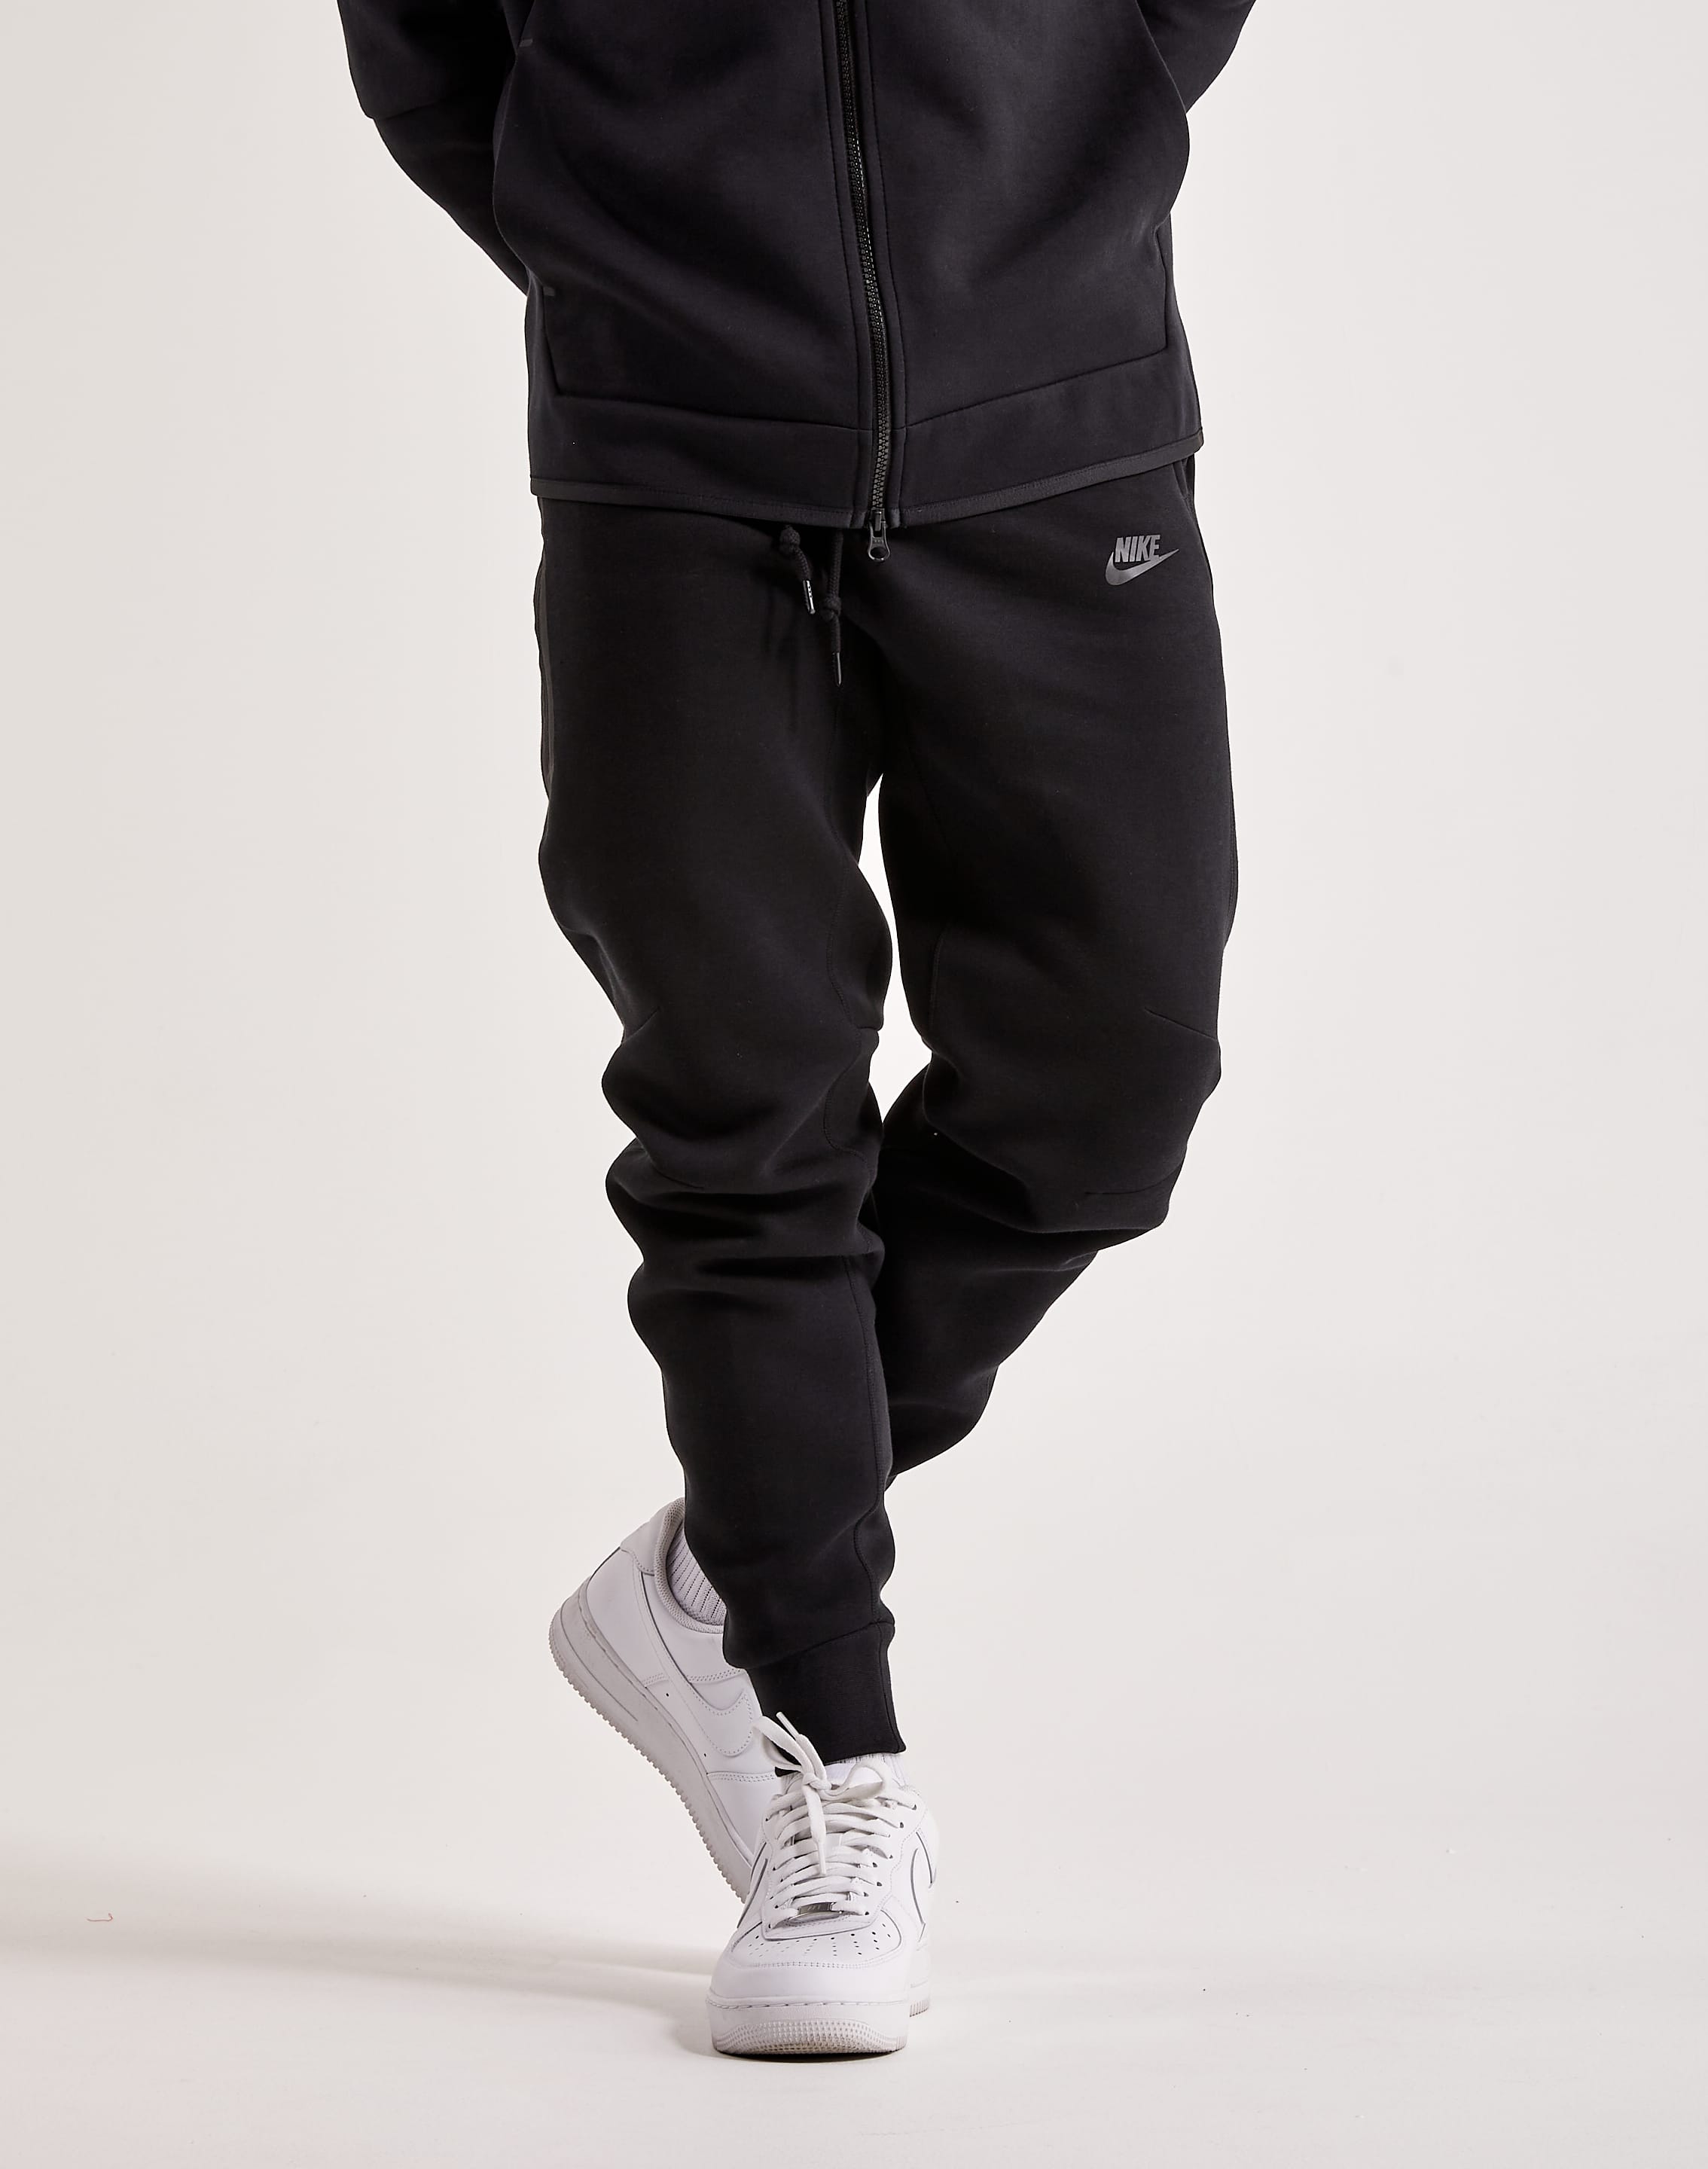 Nike Sportswear Tech Fleece Pants Sz 2XL Dark Grey Heather Black New 545343  066 | eBay